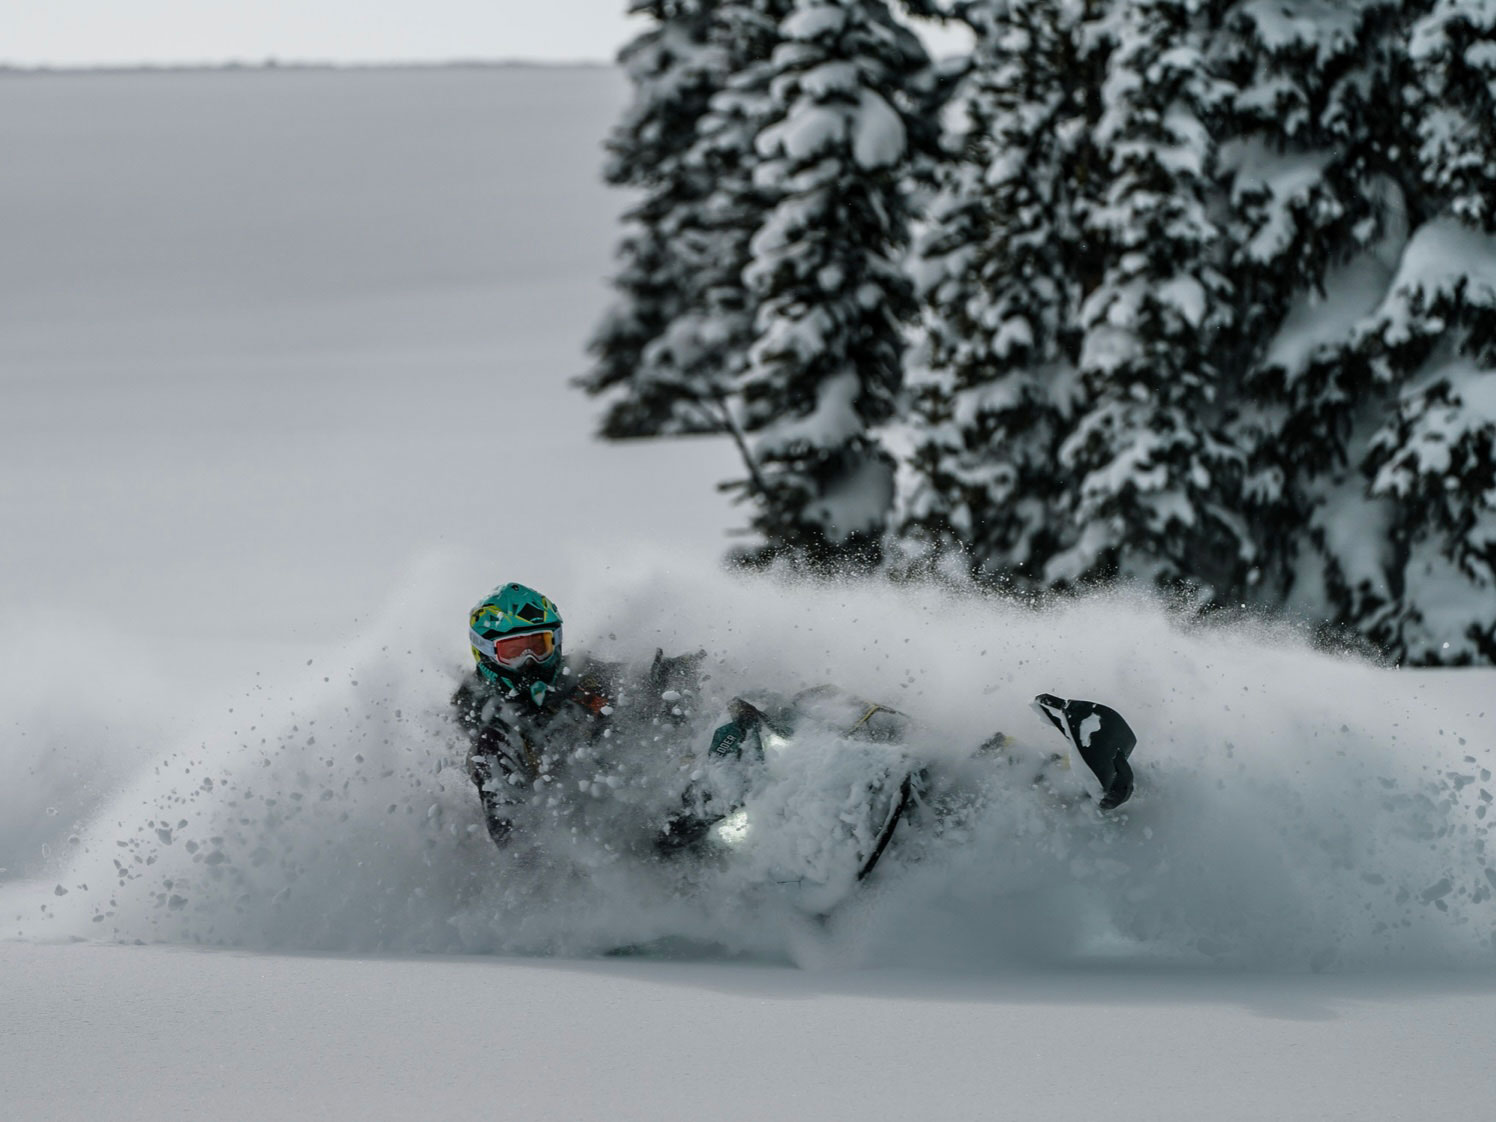 Michelle Salt riding a Ski-Doo snowmobile in mountain